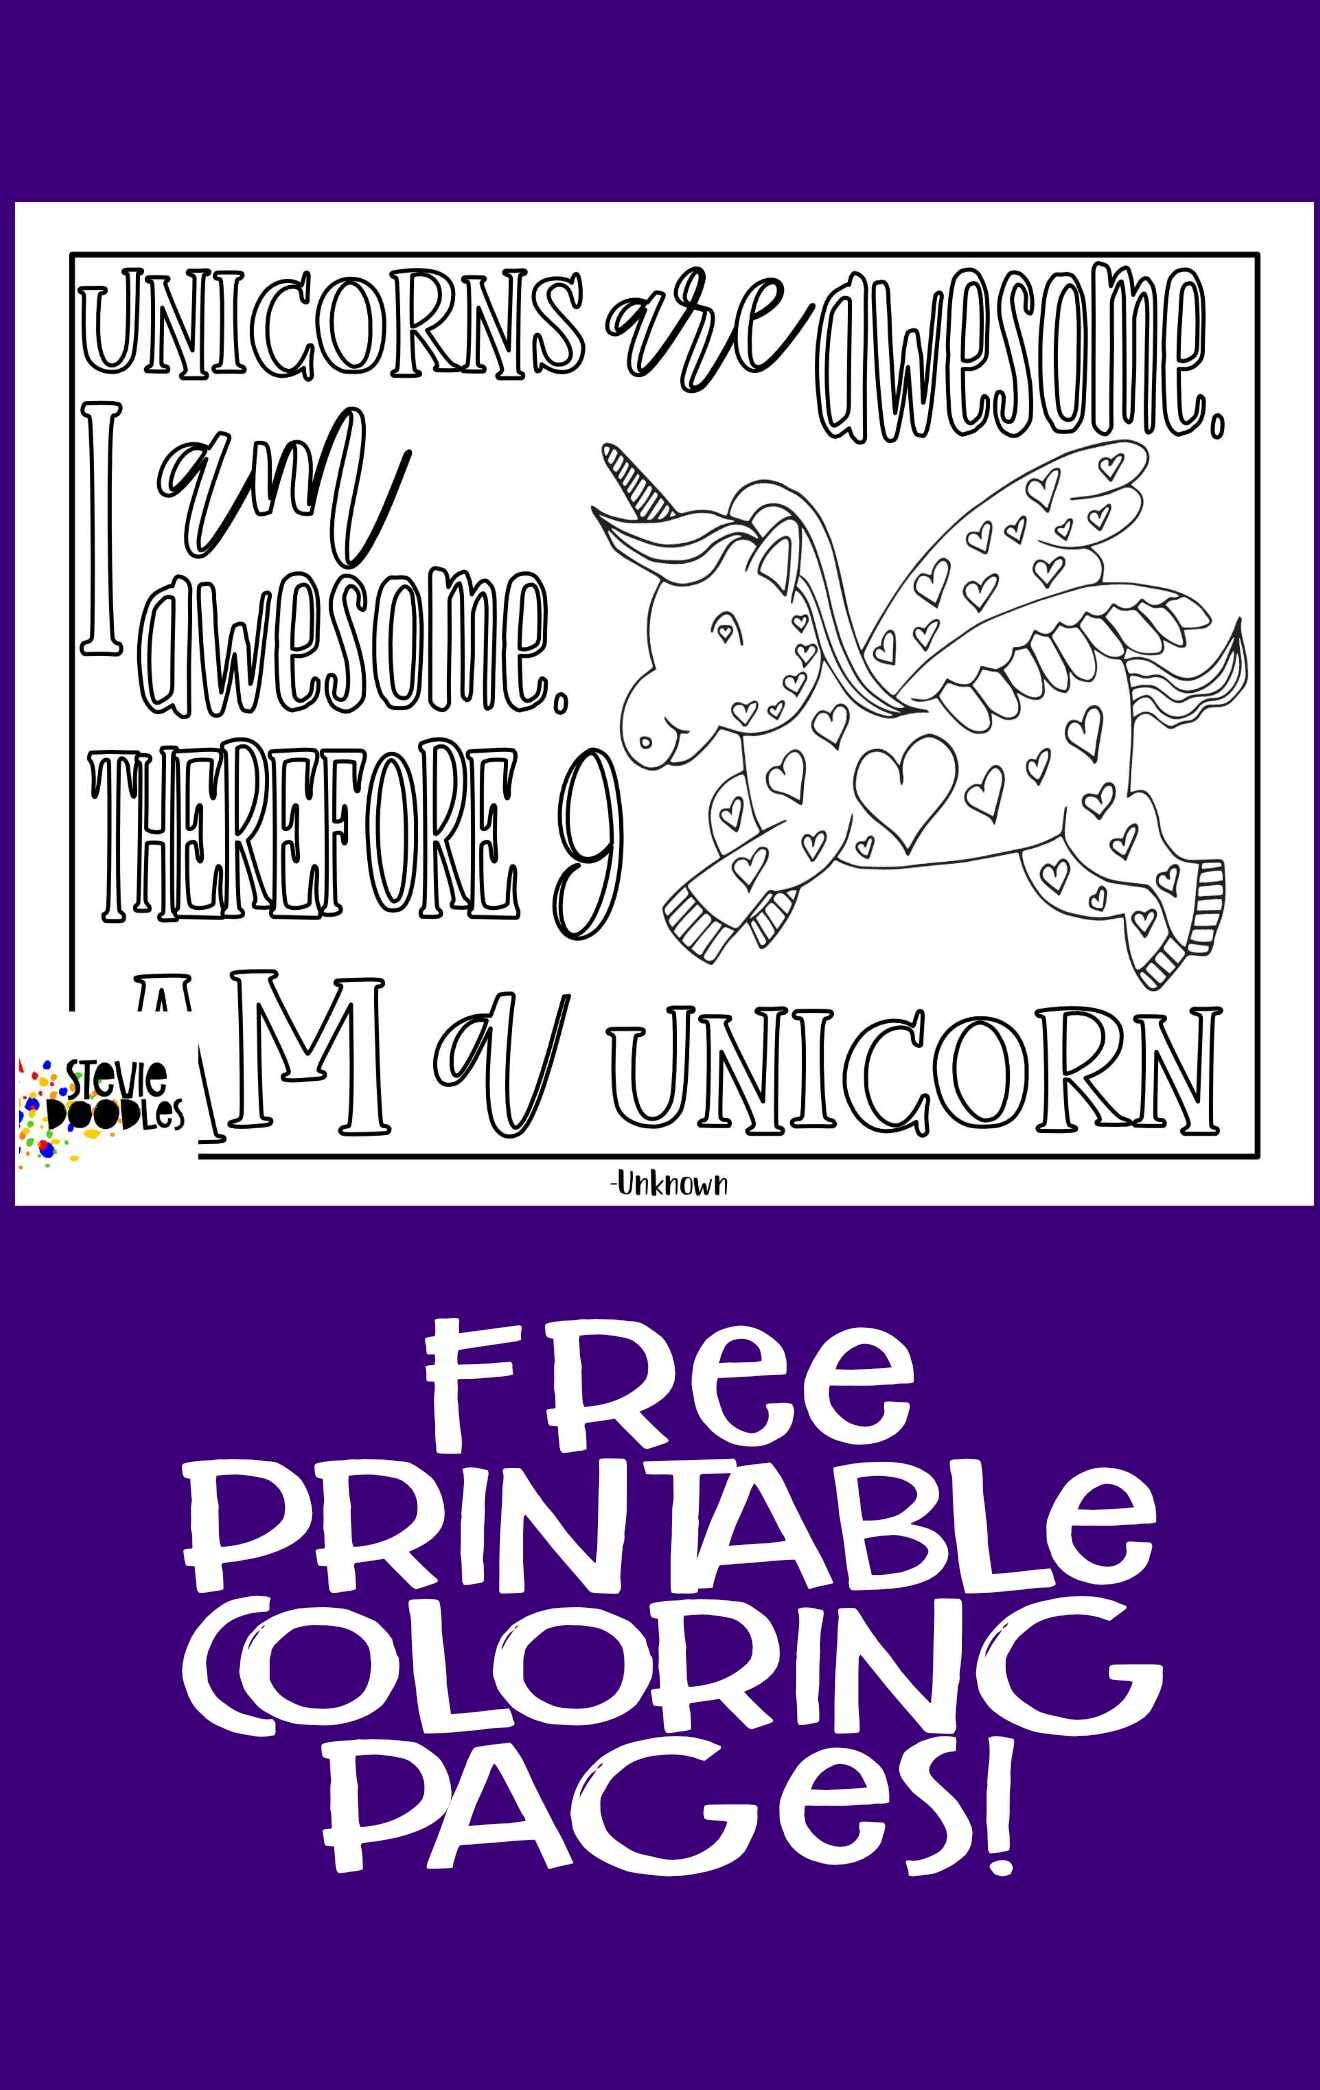 “Unicorns are awesome, I am awesome, therefore I am a unicorn.” - Free printable